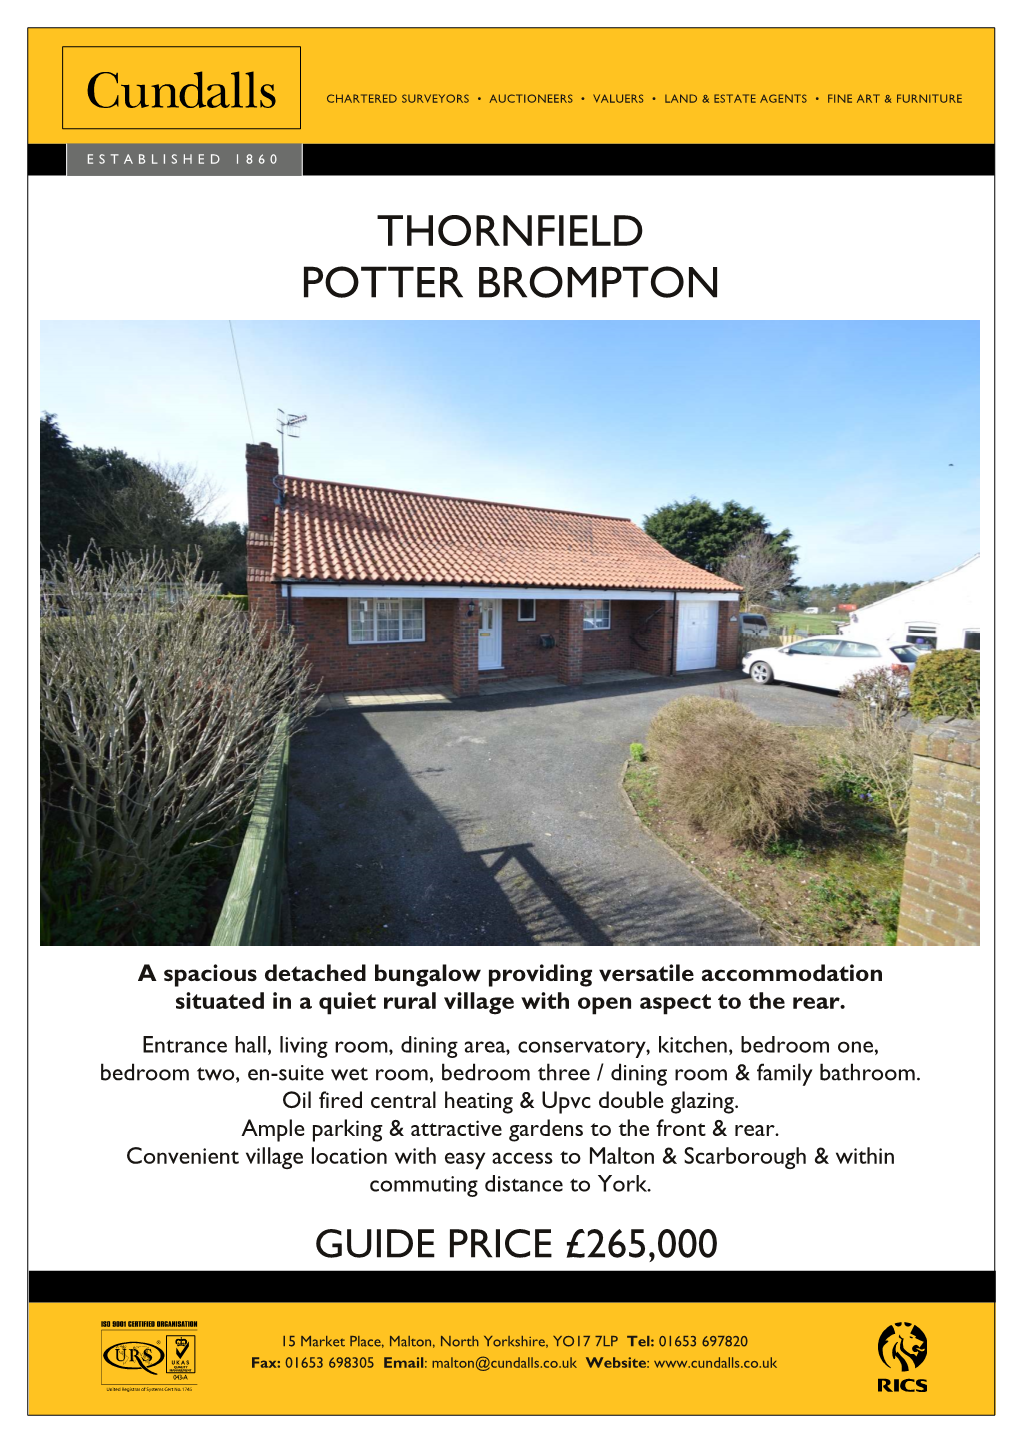 Thornfield Potter Brompton